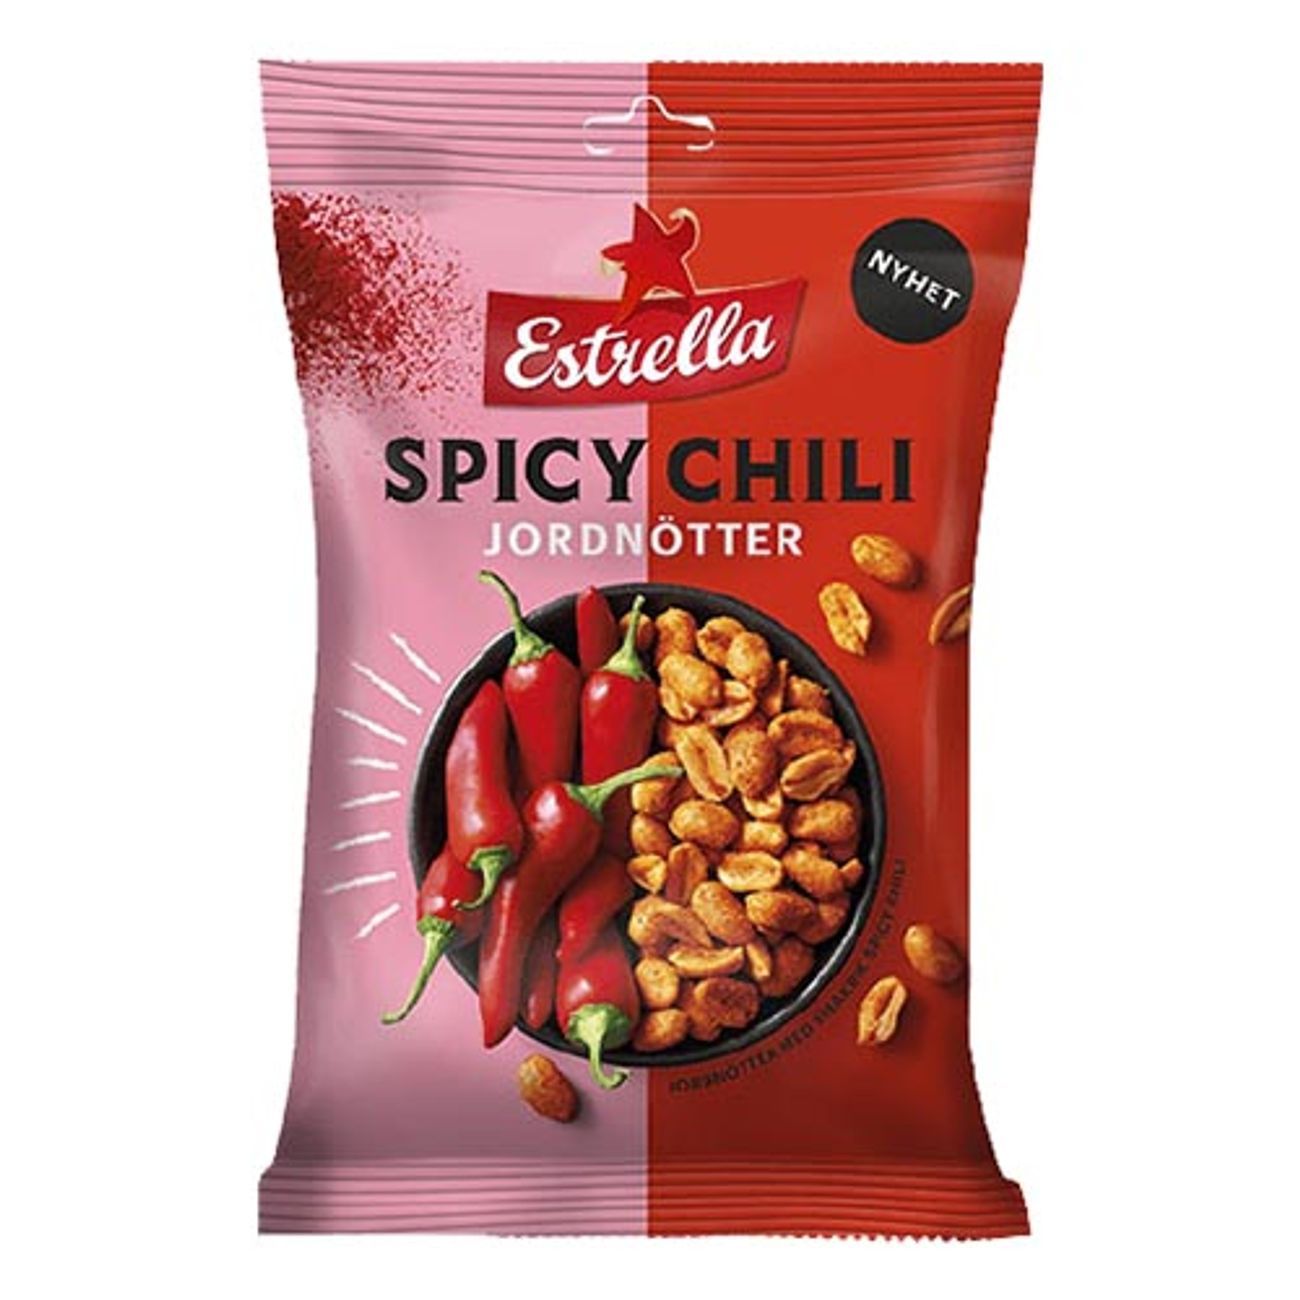 estrella-spicy-chili-jordnotter-1